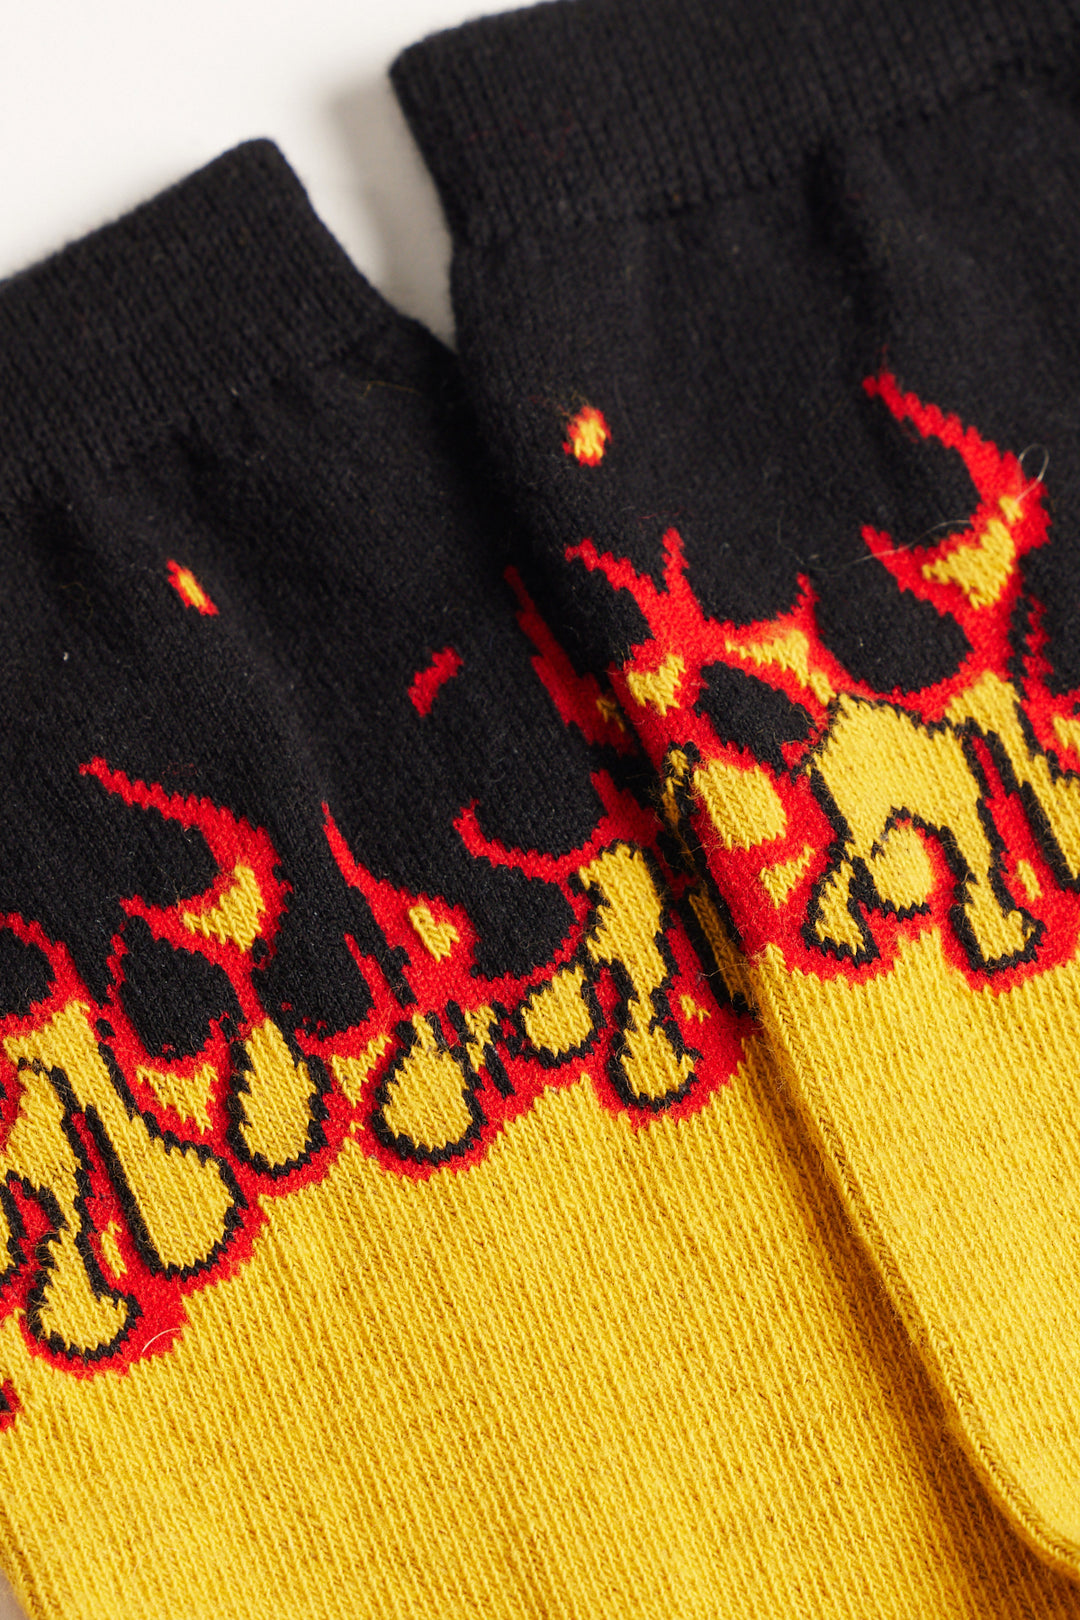 Flaming Socks - Flame